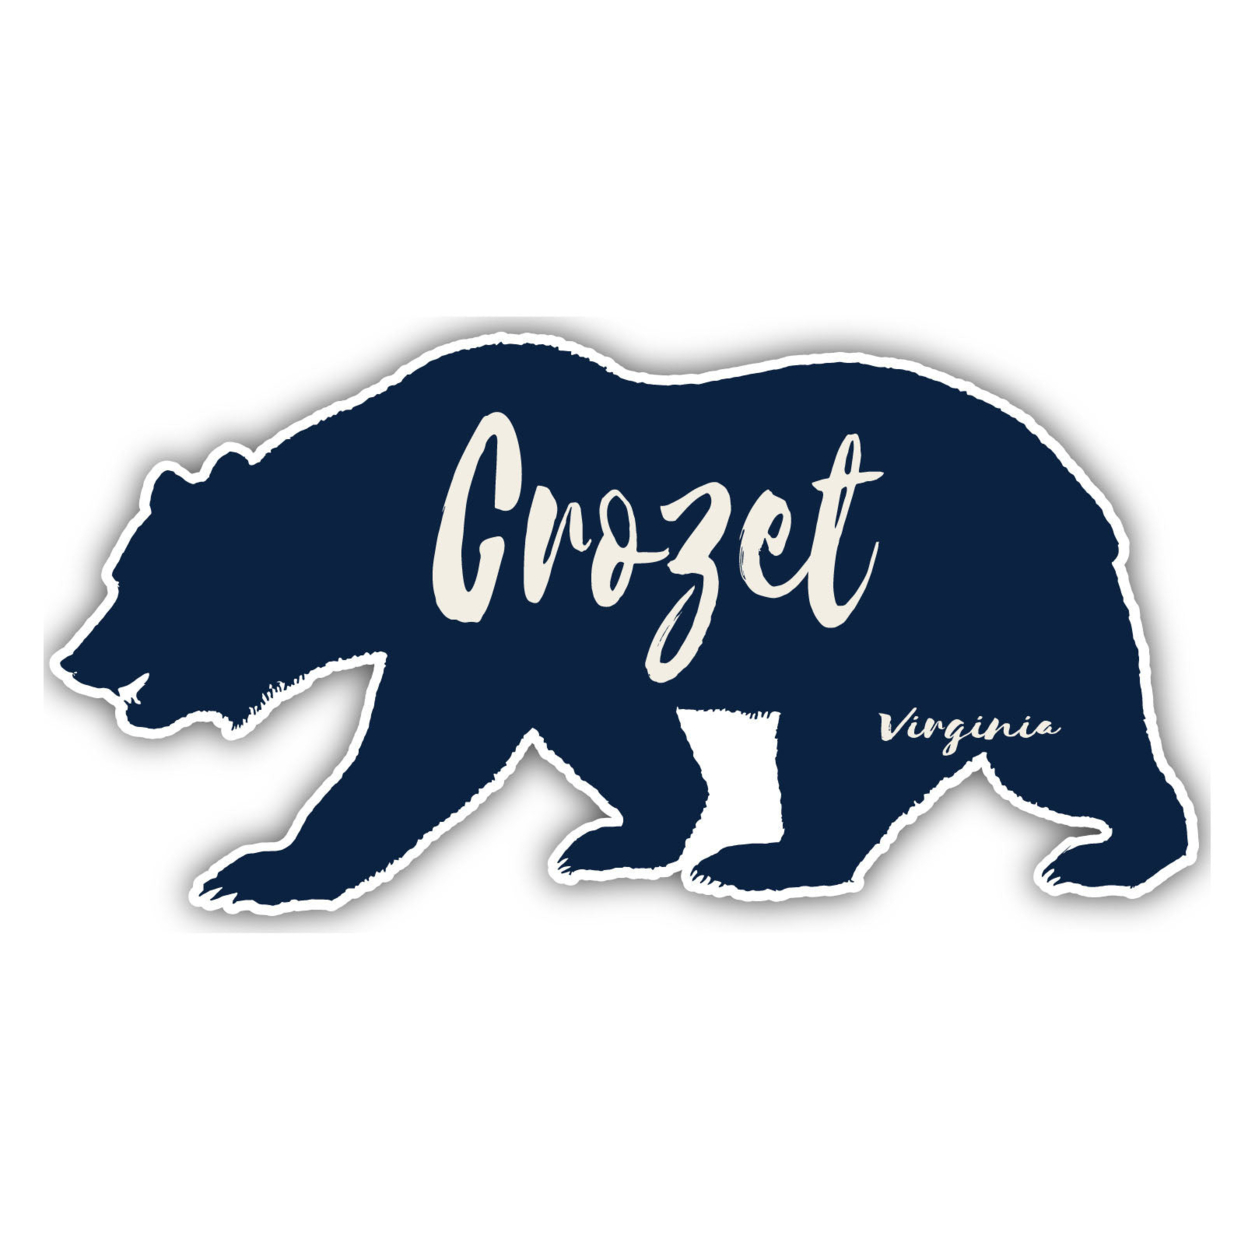 Crozet Virginia Souvenir Decorative Stickers (Choose Theme And Size) - Single Unit, 4-Inch, Bear